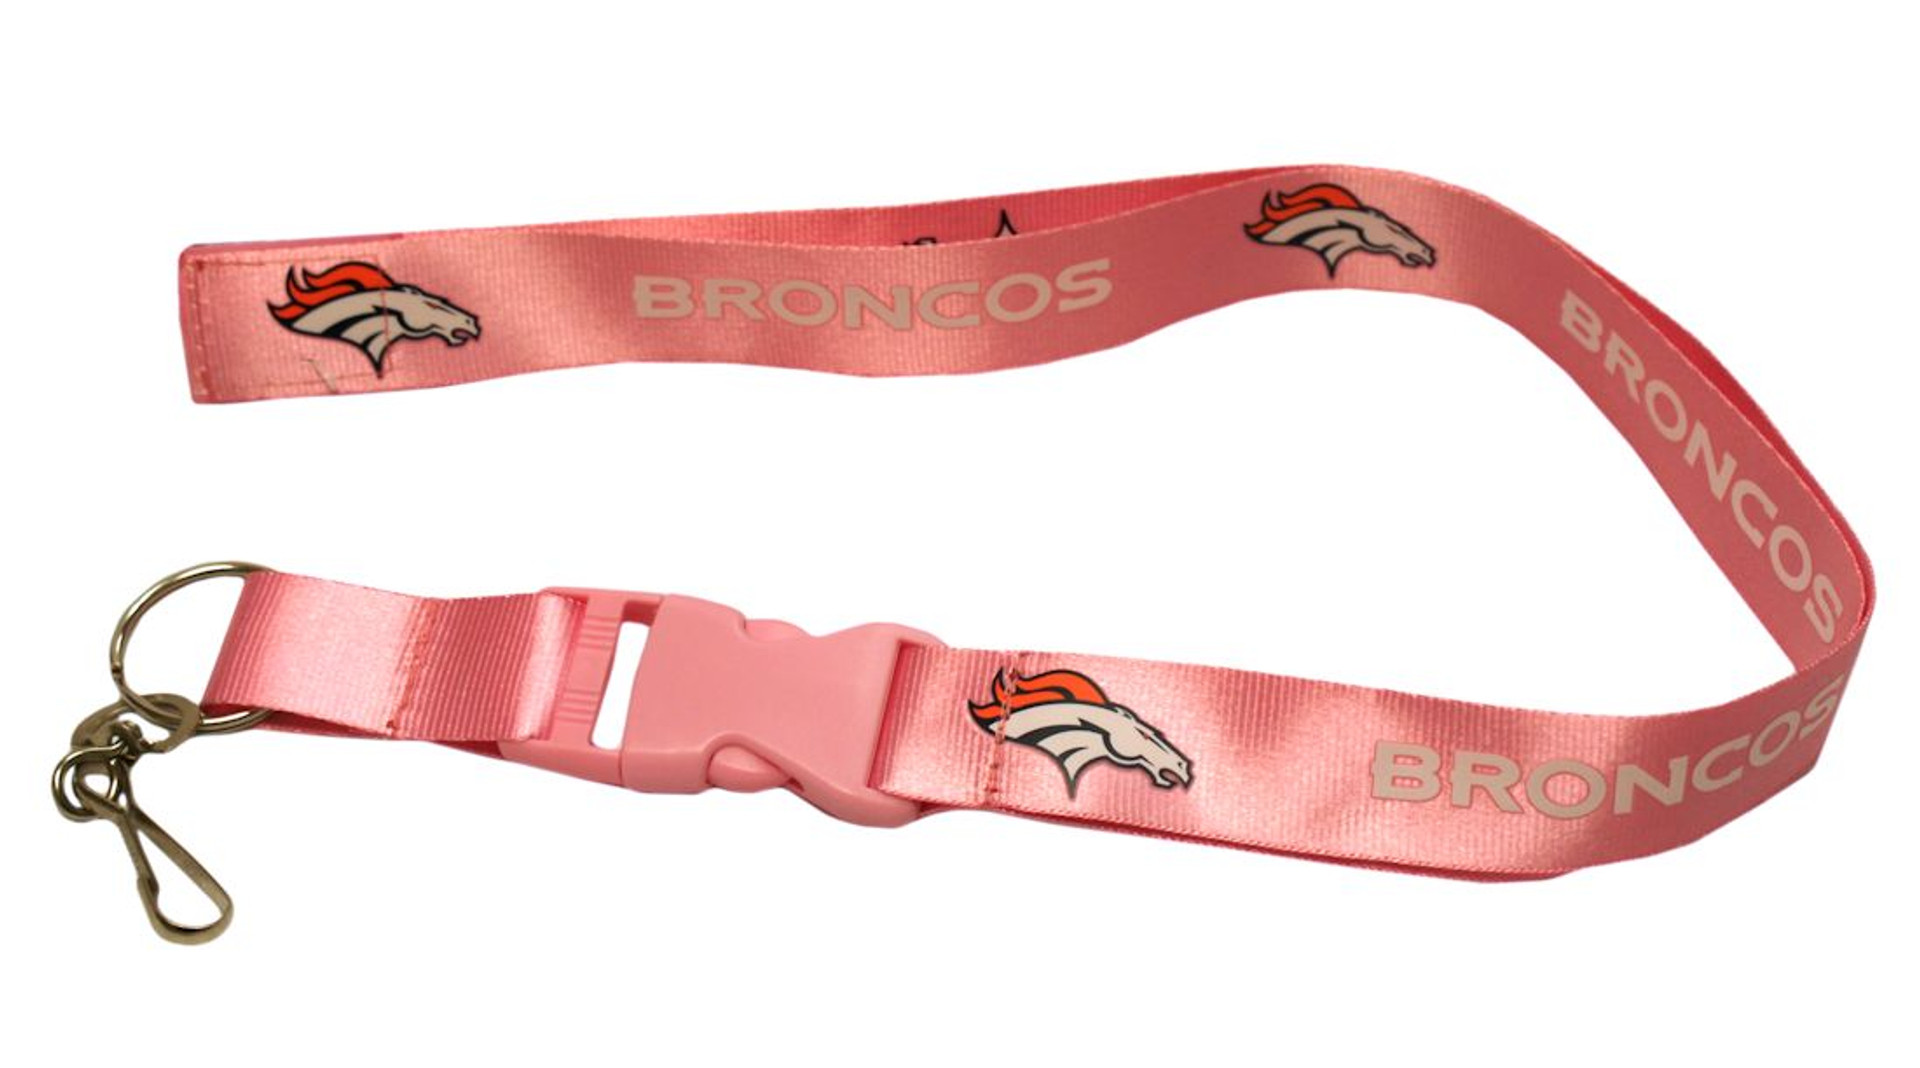 Denver Broncos Lanyard - Breakaway with Key Ring - Pink - Sports Fan Shop